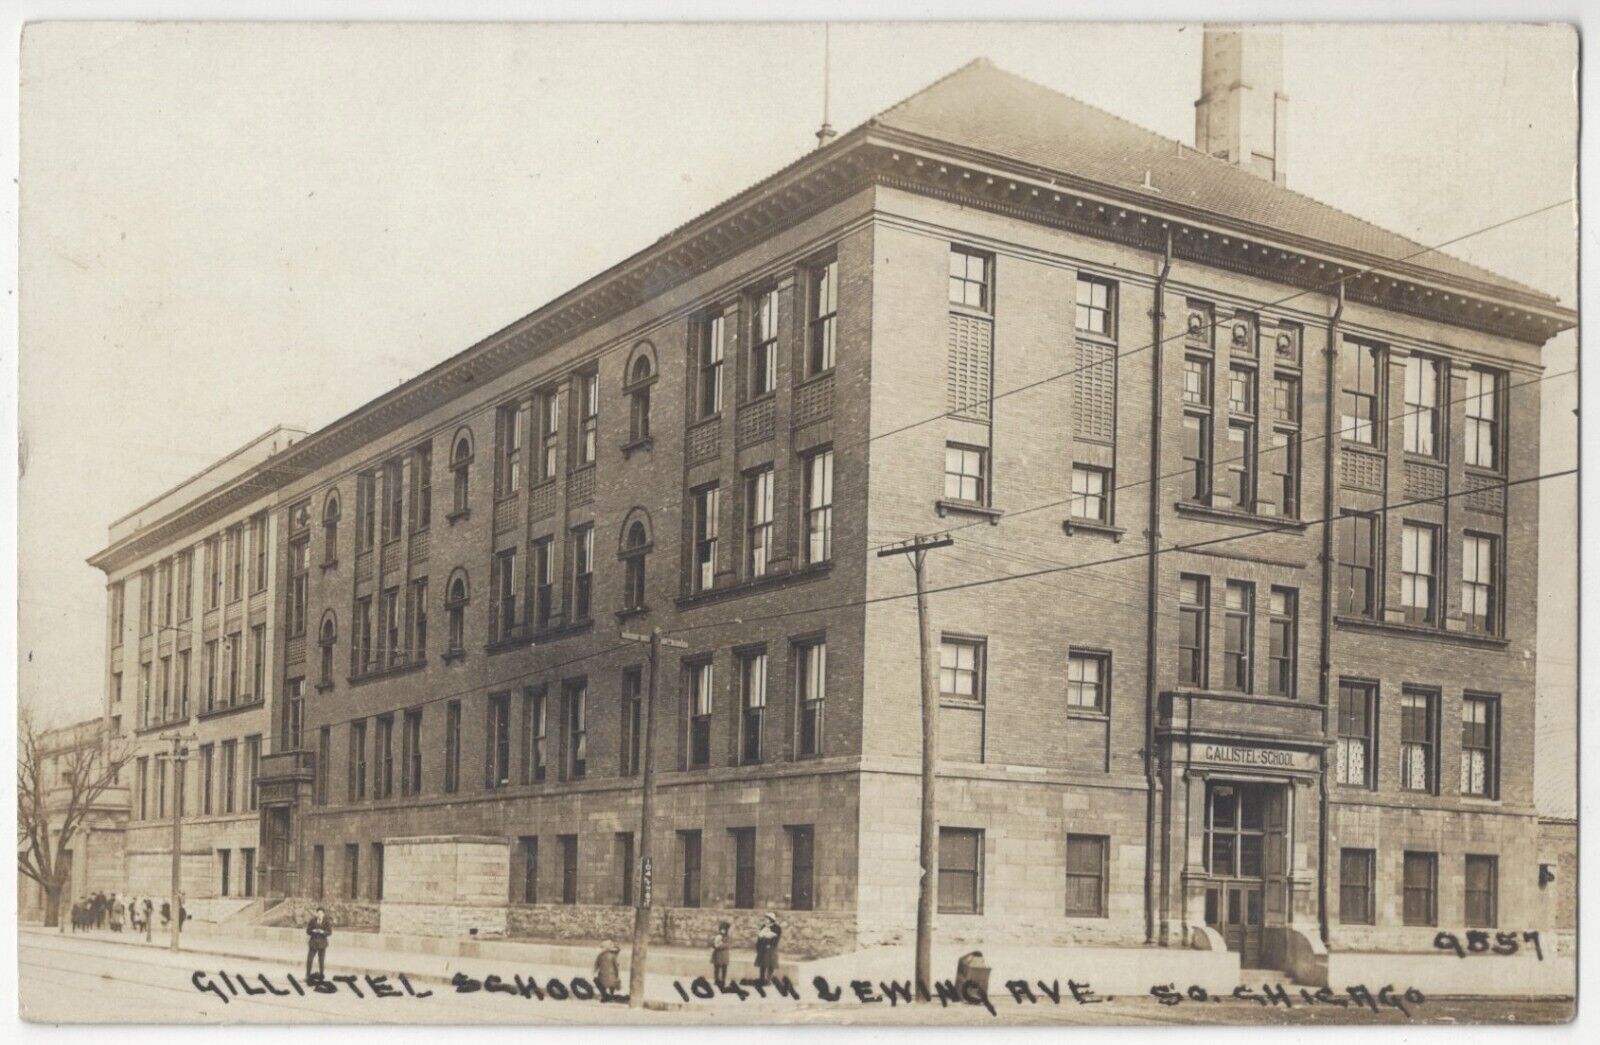 1911 Chicago, Illinois - REAL PHOTO Gallistel School Building - Old Postcard